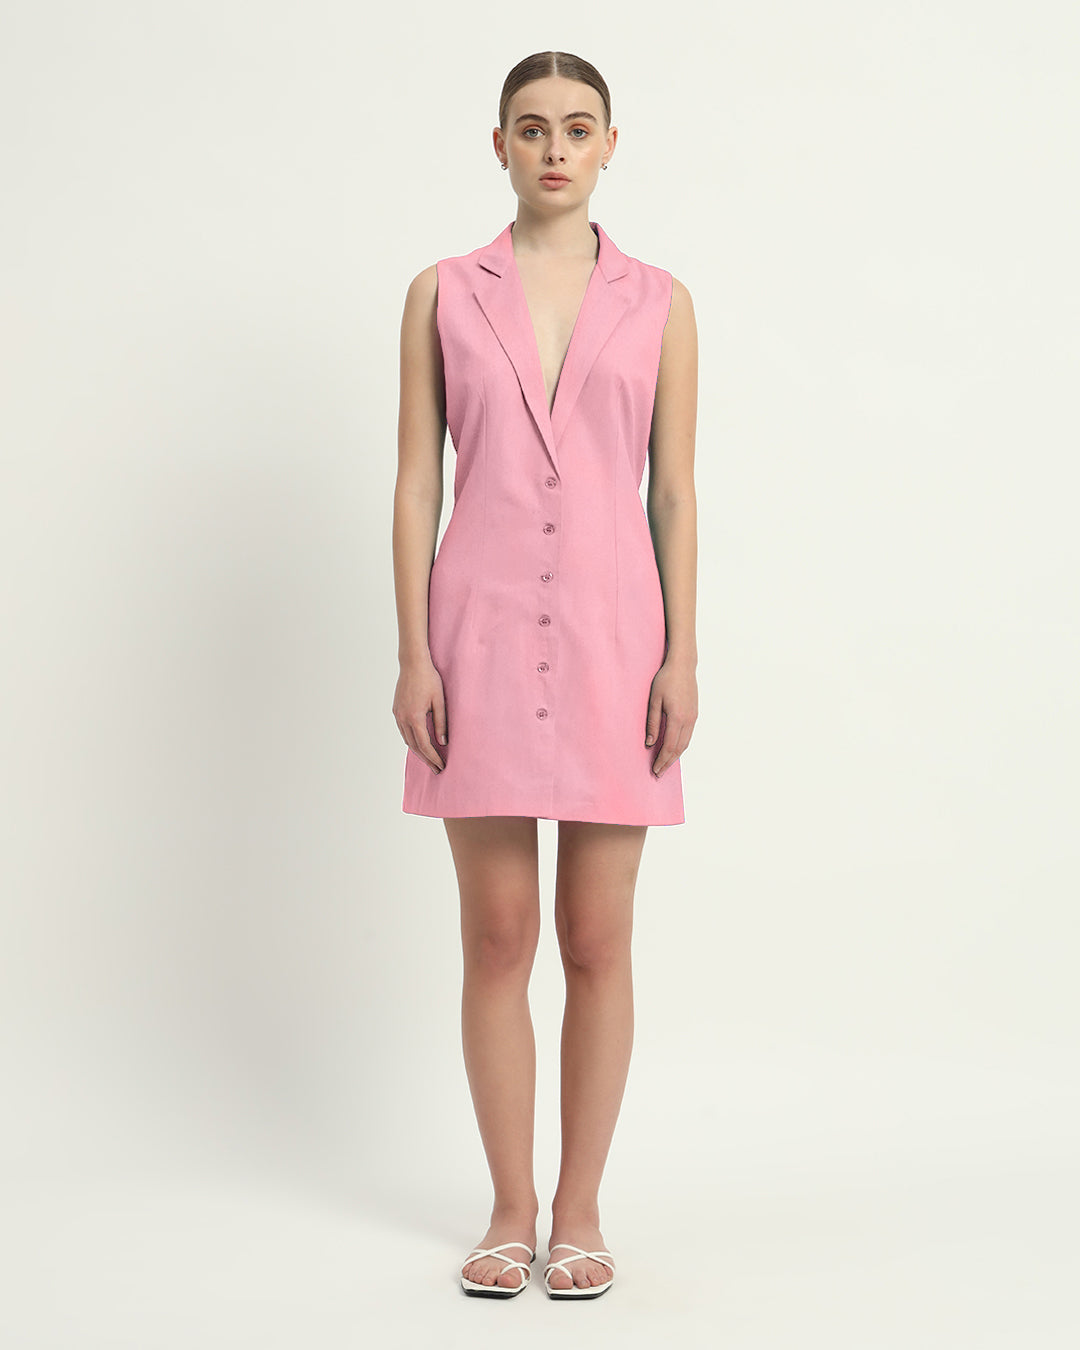 The Vernon Fondant Pink Cotton Dress